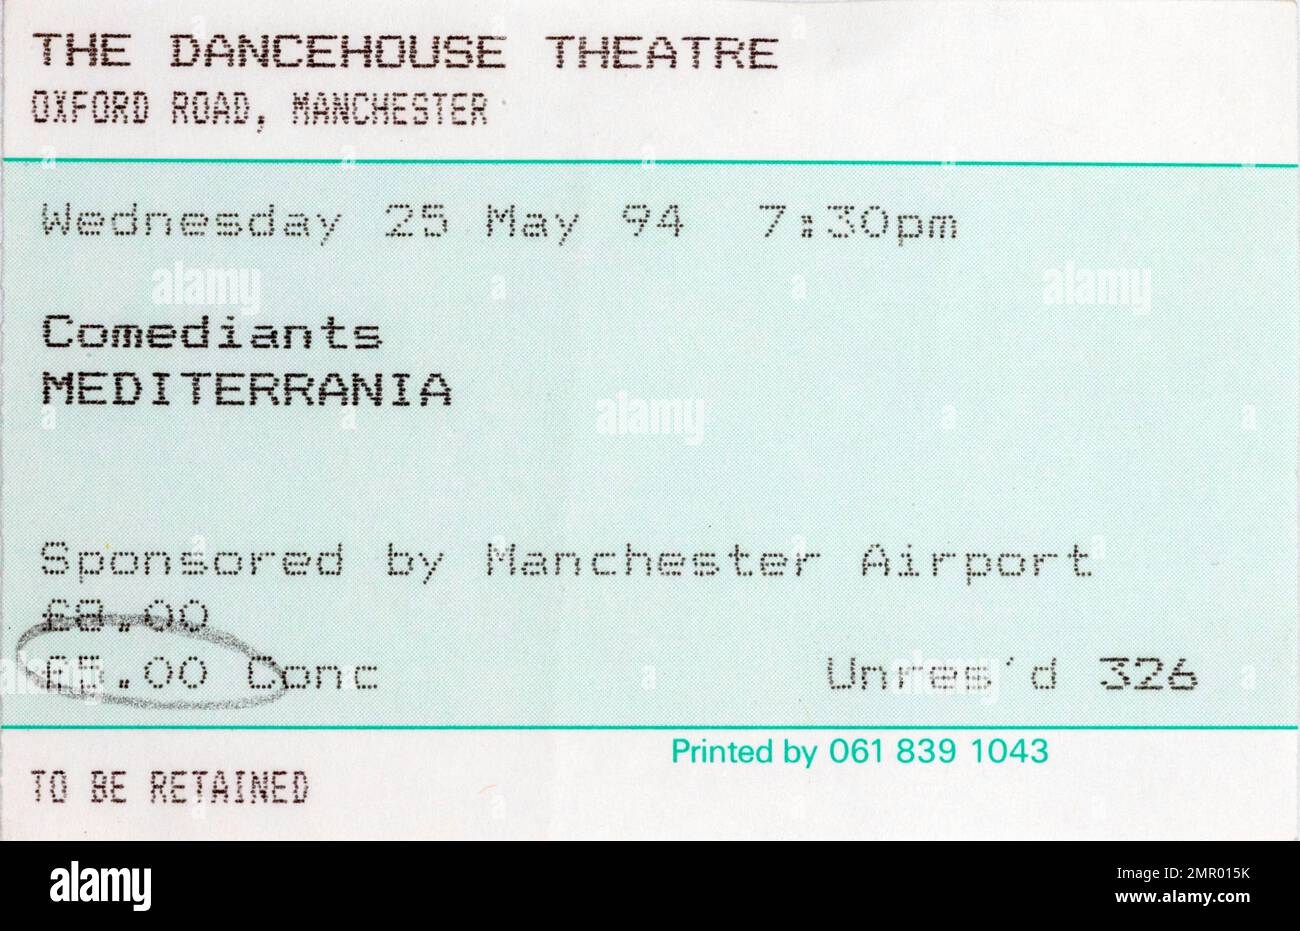 Comediants, Mediterrania, The Dancehouse Theatre, 25 May 1994, Concert Ticket Stubs, Music Concert Memorabilia , Manchester, England, UK Stock Photo